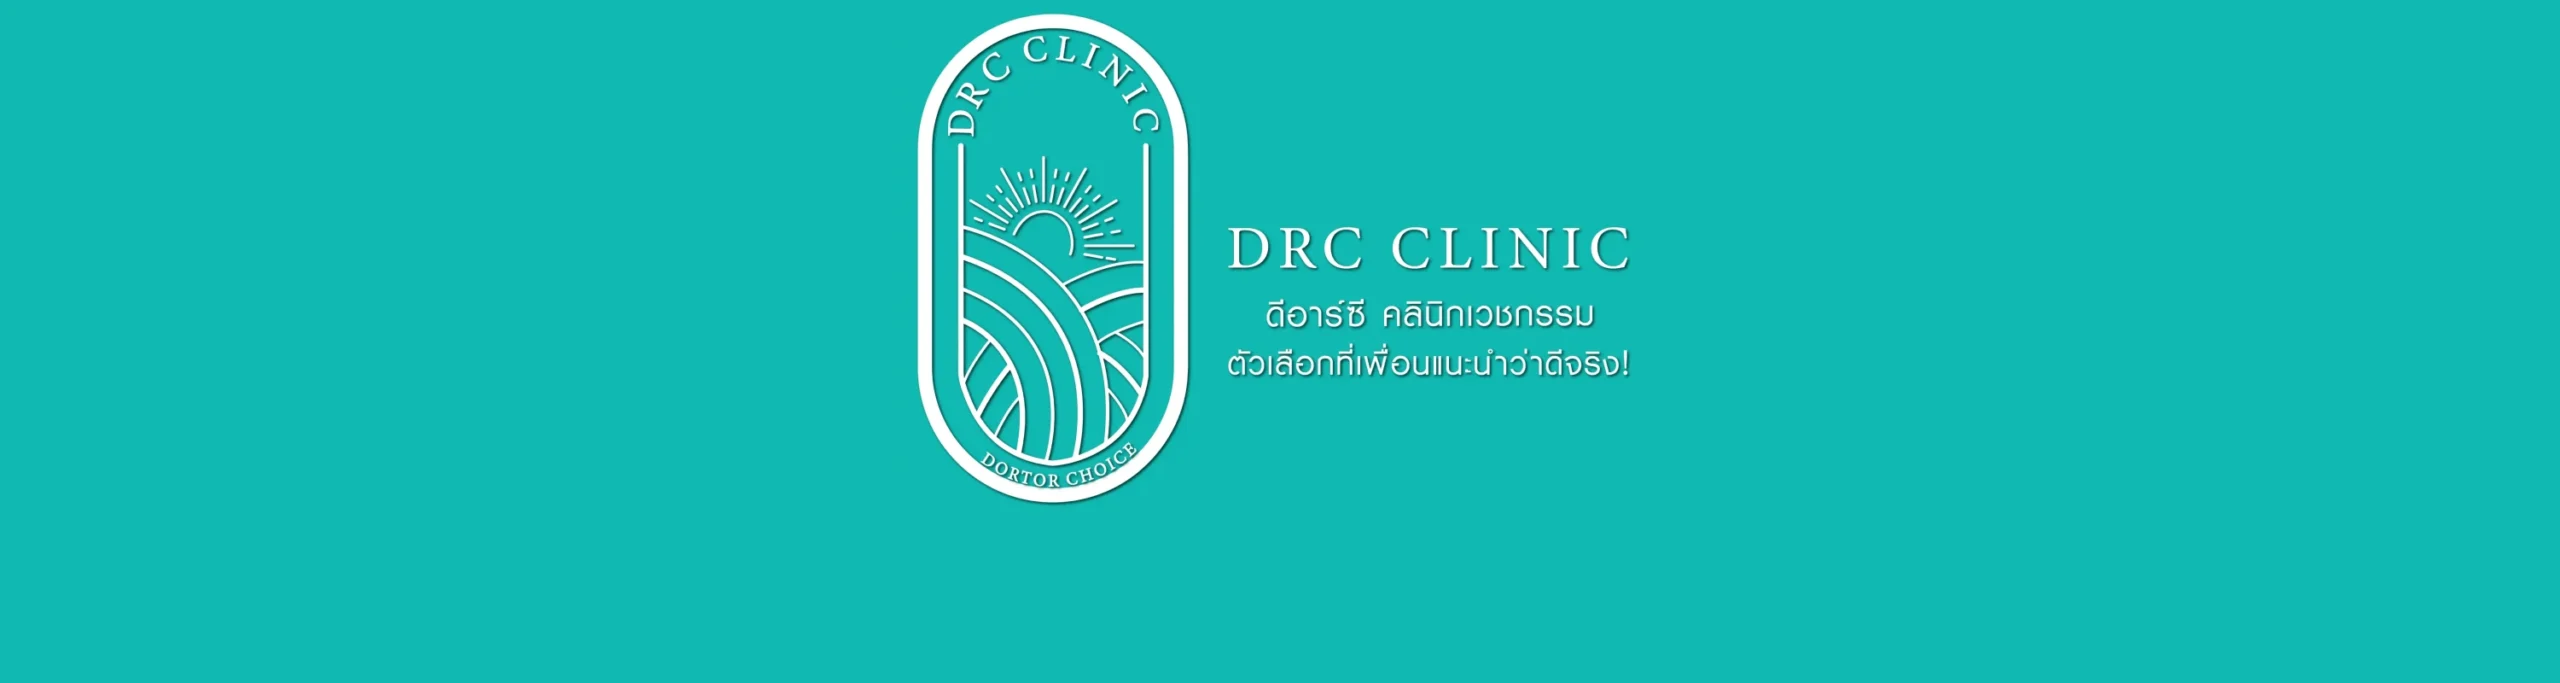 DRC Clinic Banner